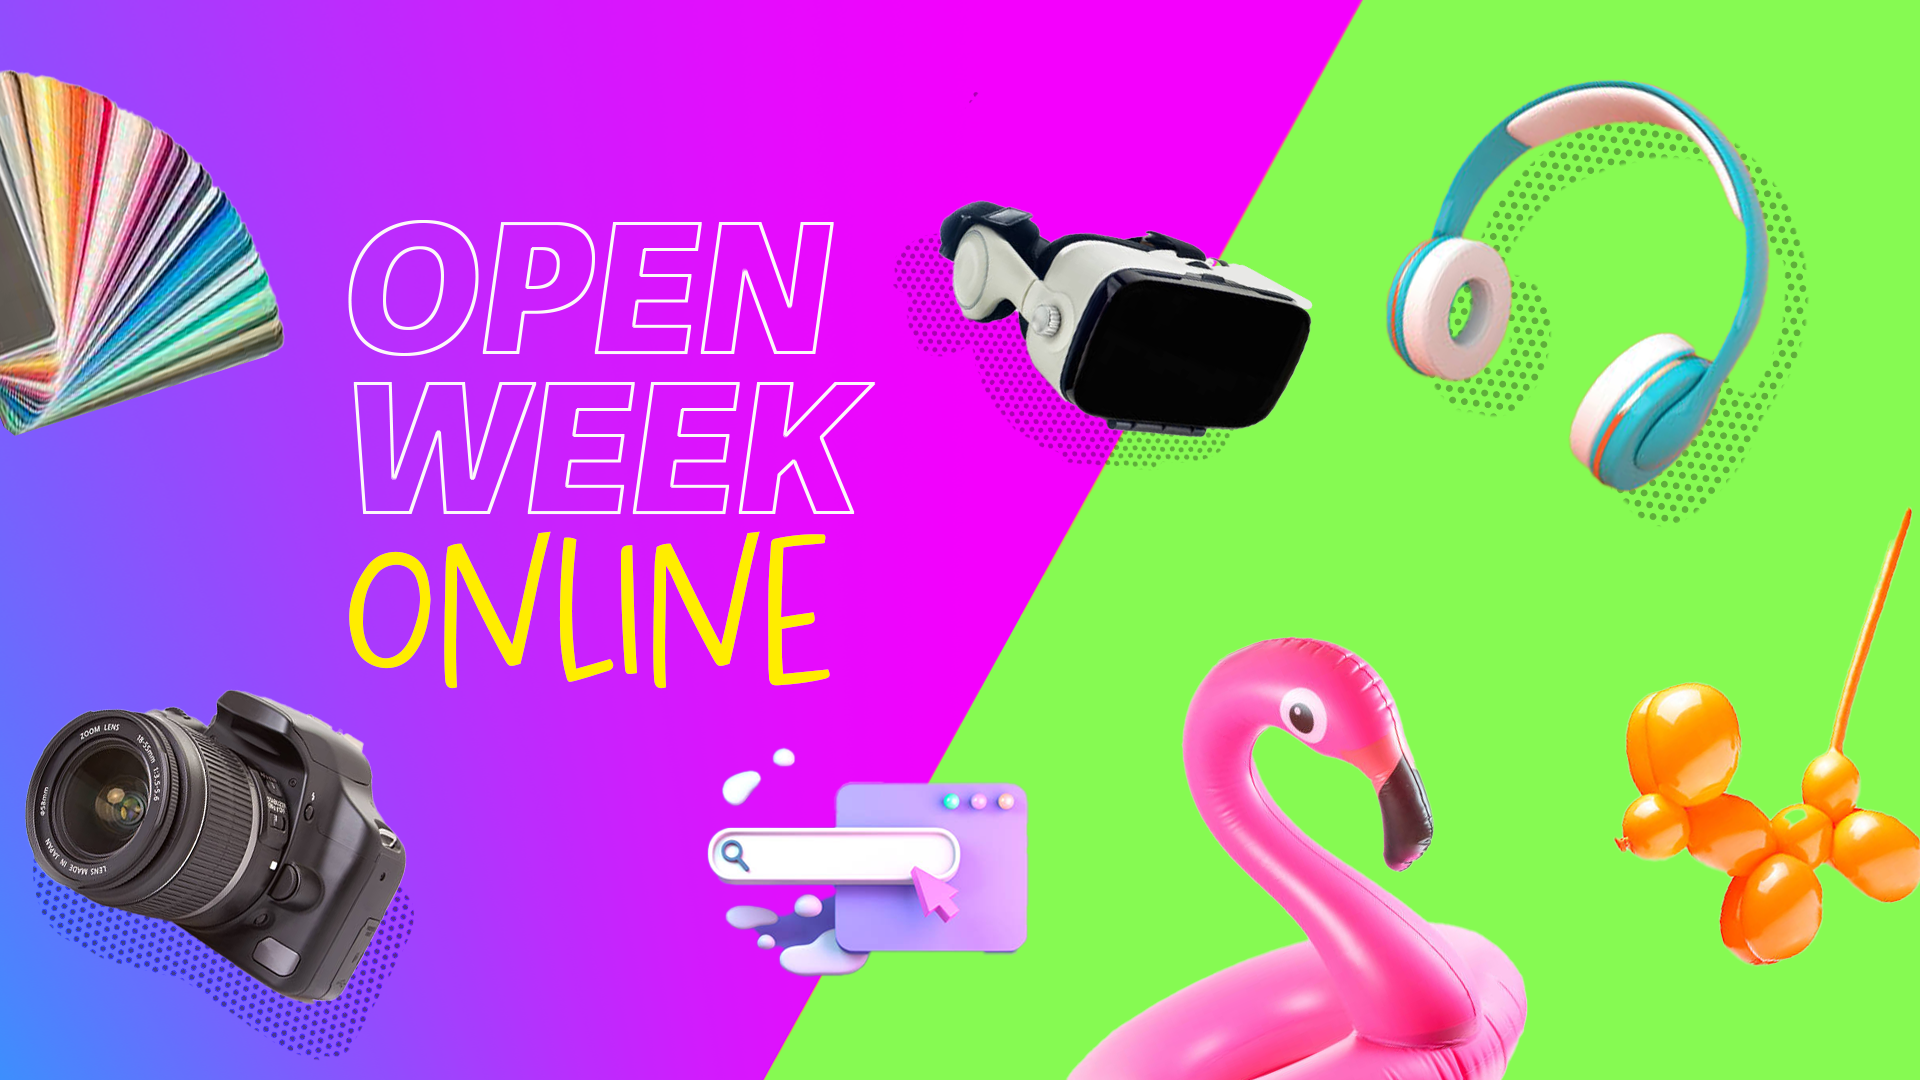 Open Week online